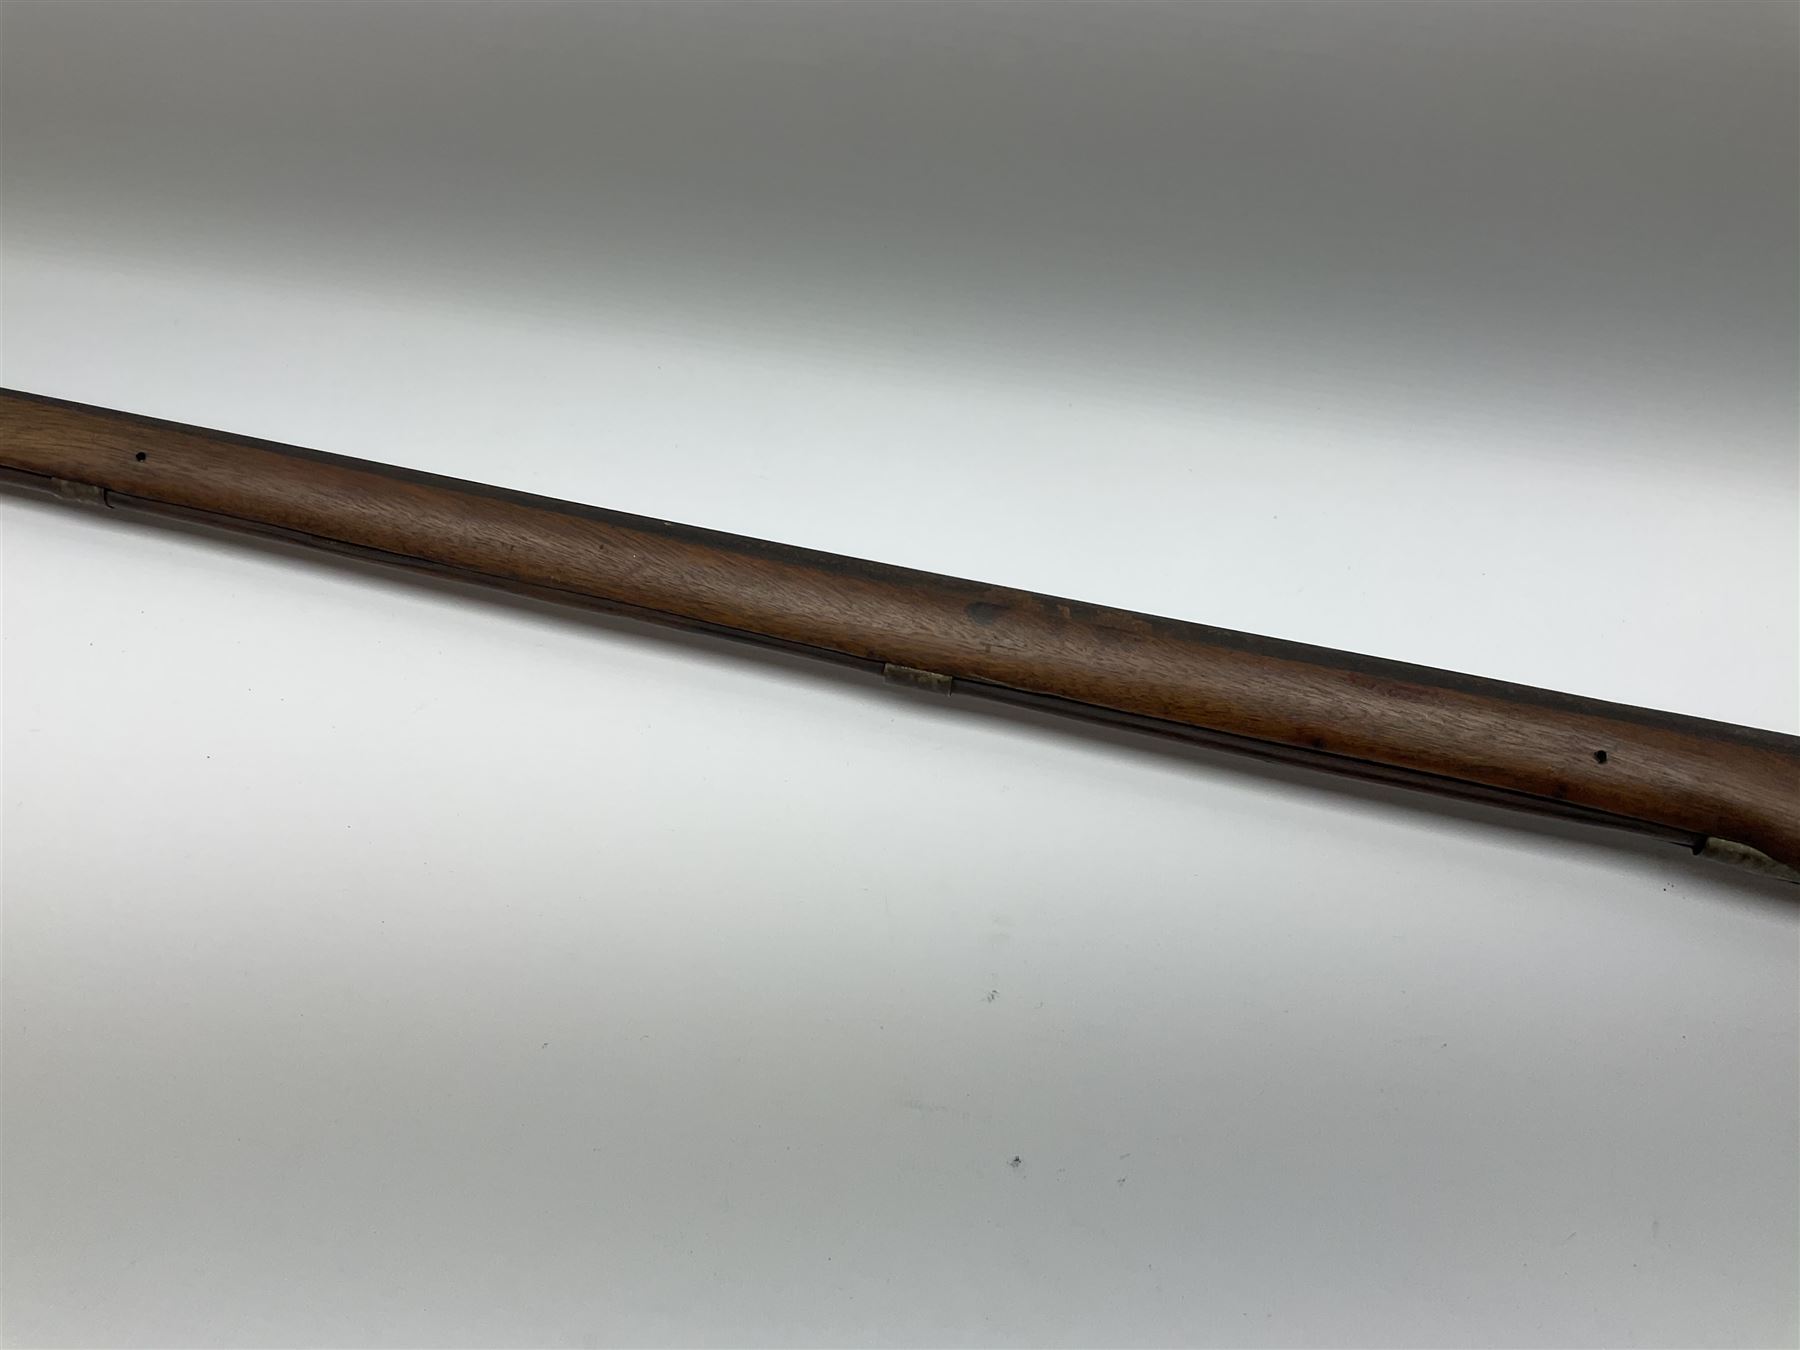 19th century flintlock musket for restoration or display - Bild 8 aus 11